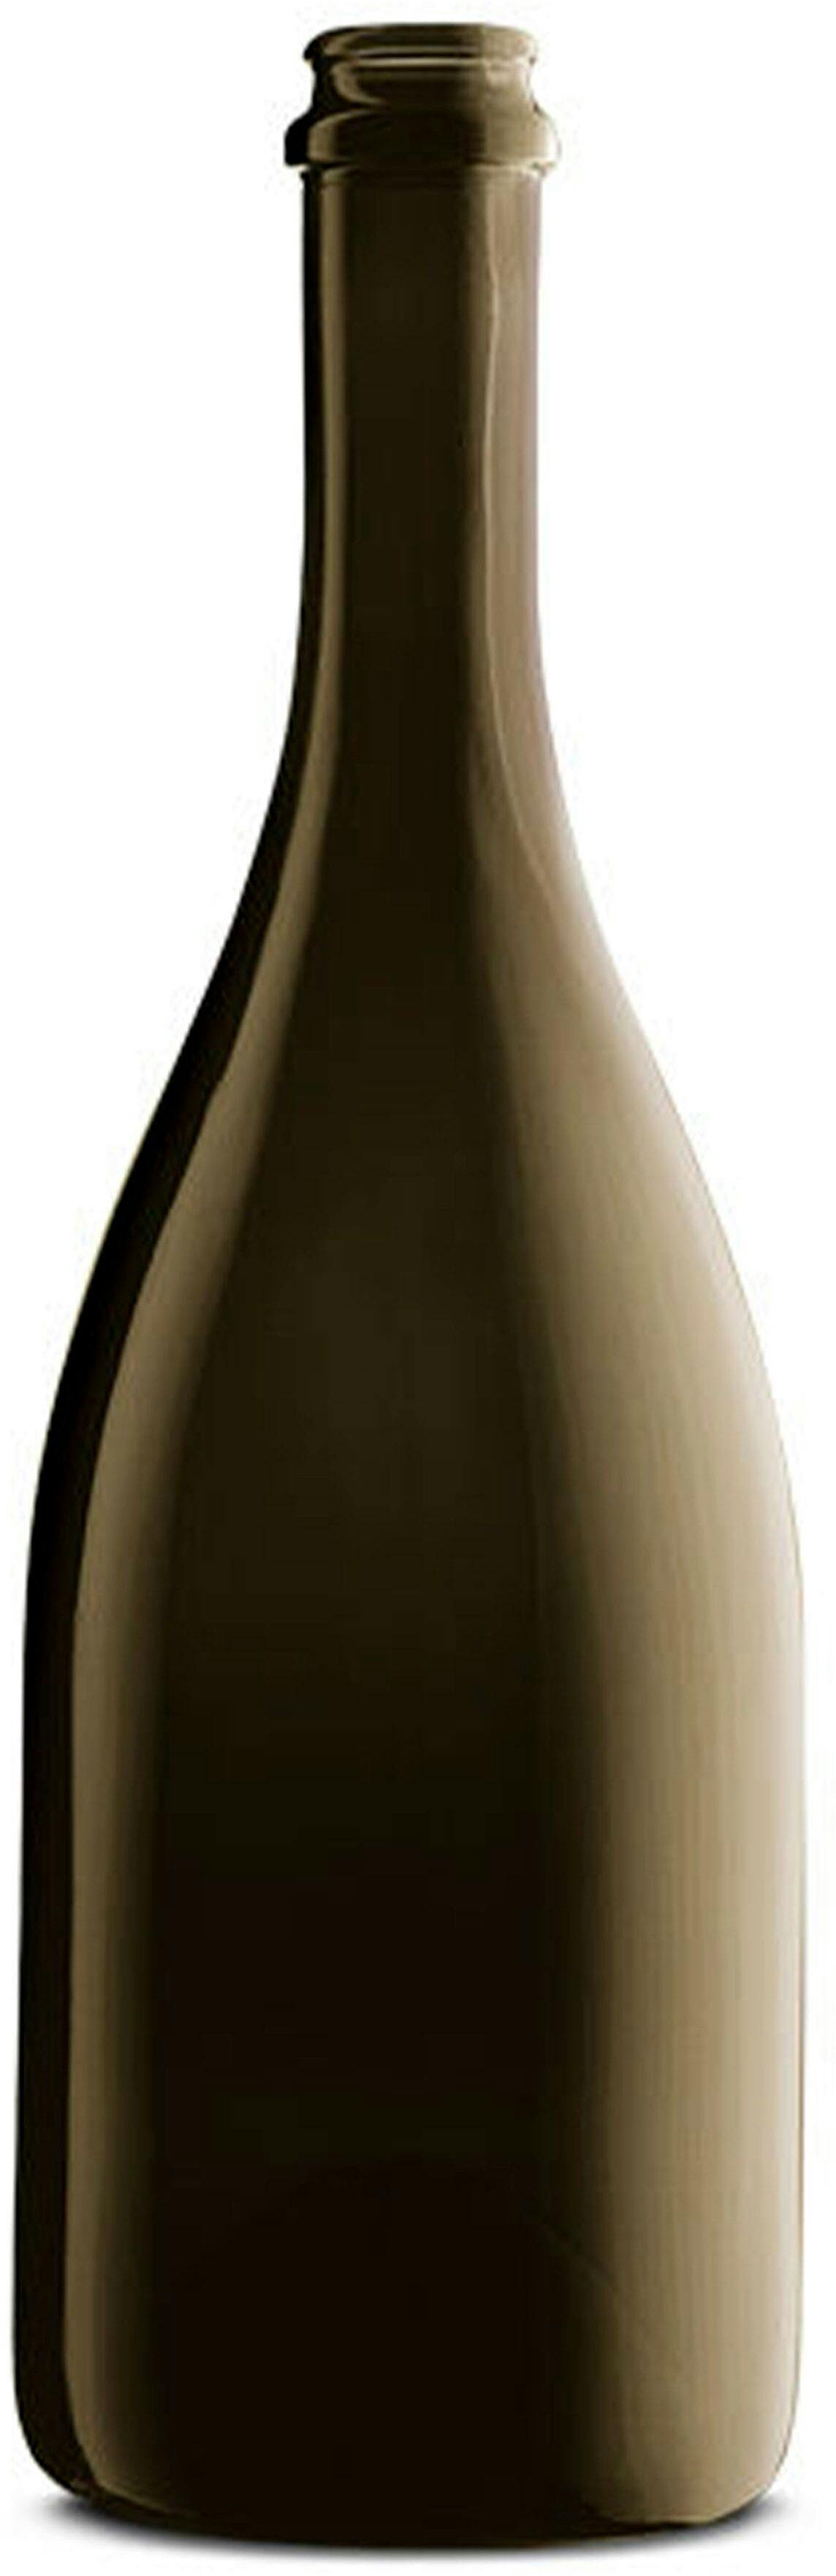 Bottle SPUM MONTEROSSA 750 ml BG-Cork